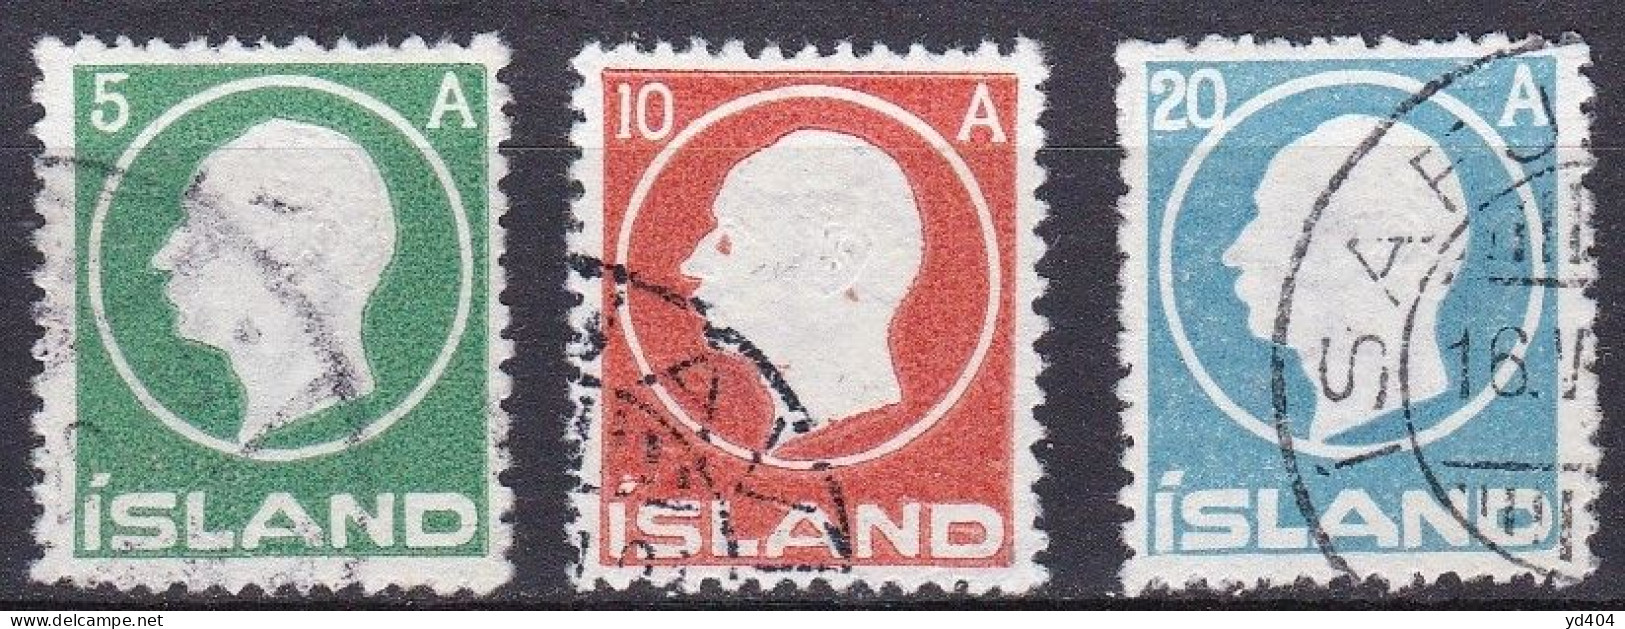 IS012F – ISLANDE – ICELAND – 1912 – KING FRDERIK VIII – SG # 102/4 USED 46 € - Oblitérés